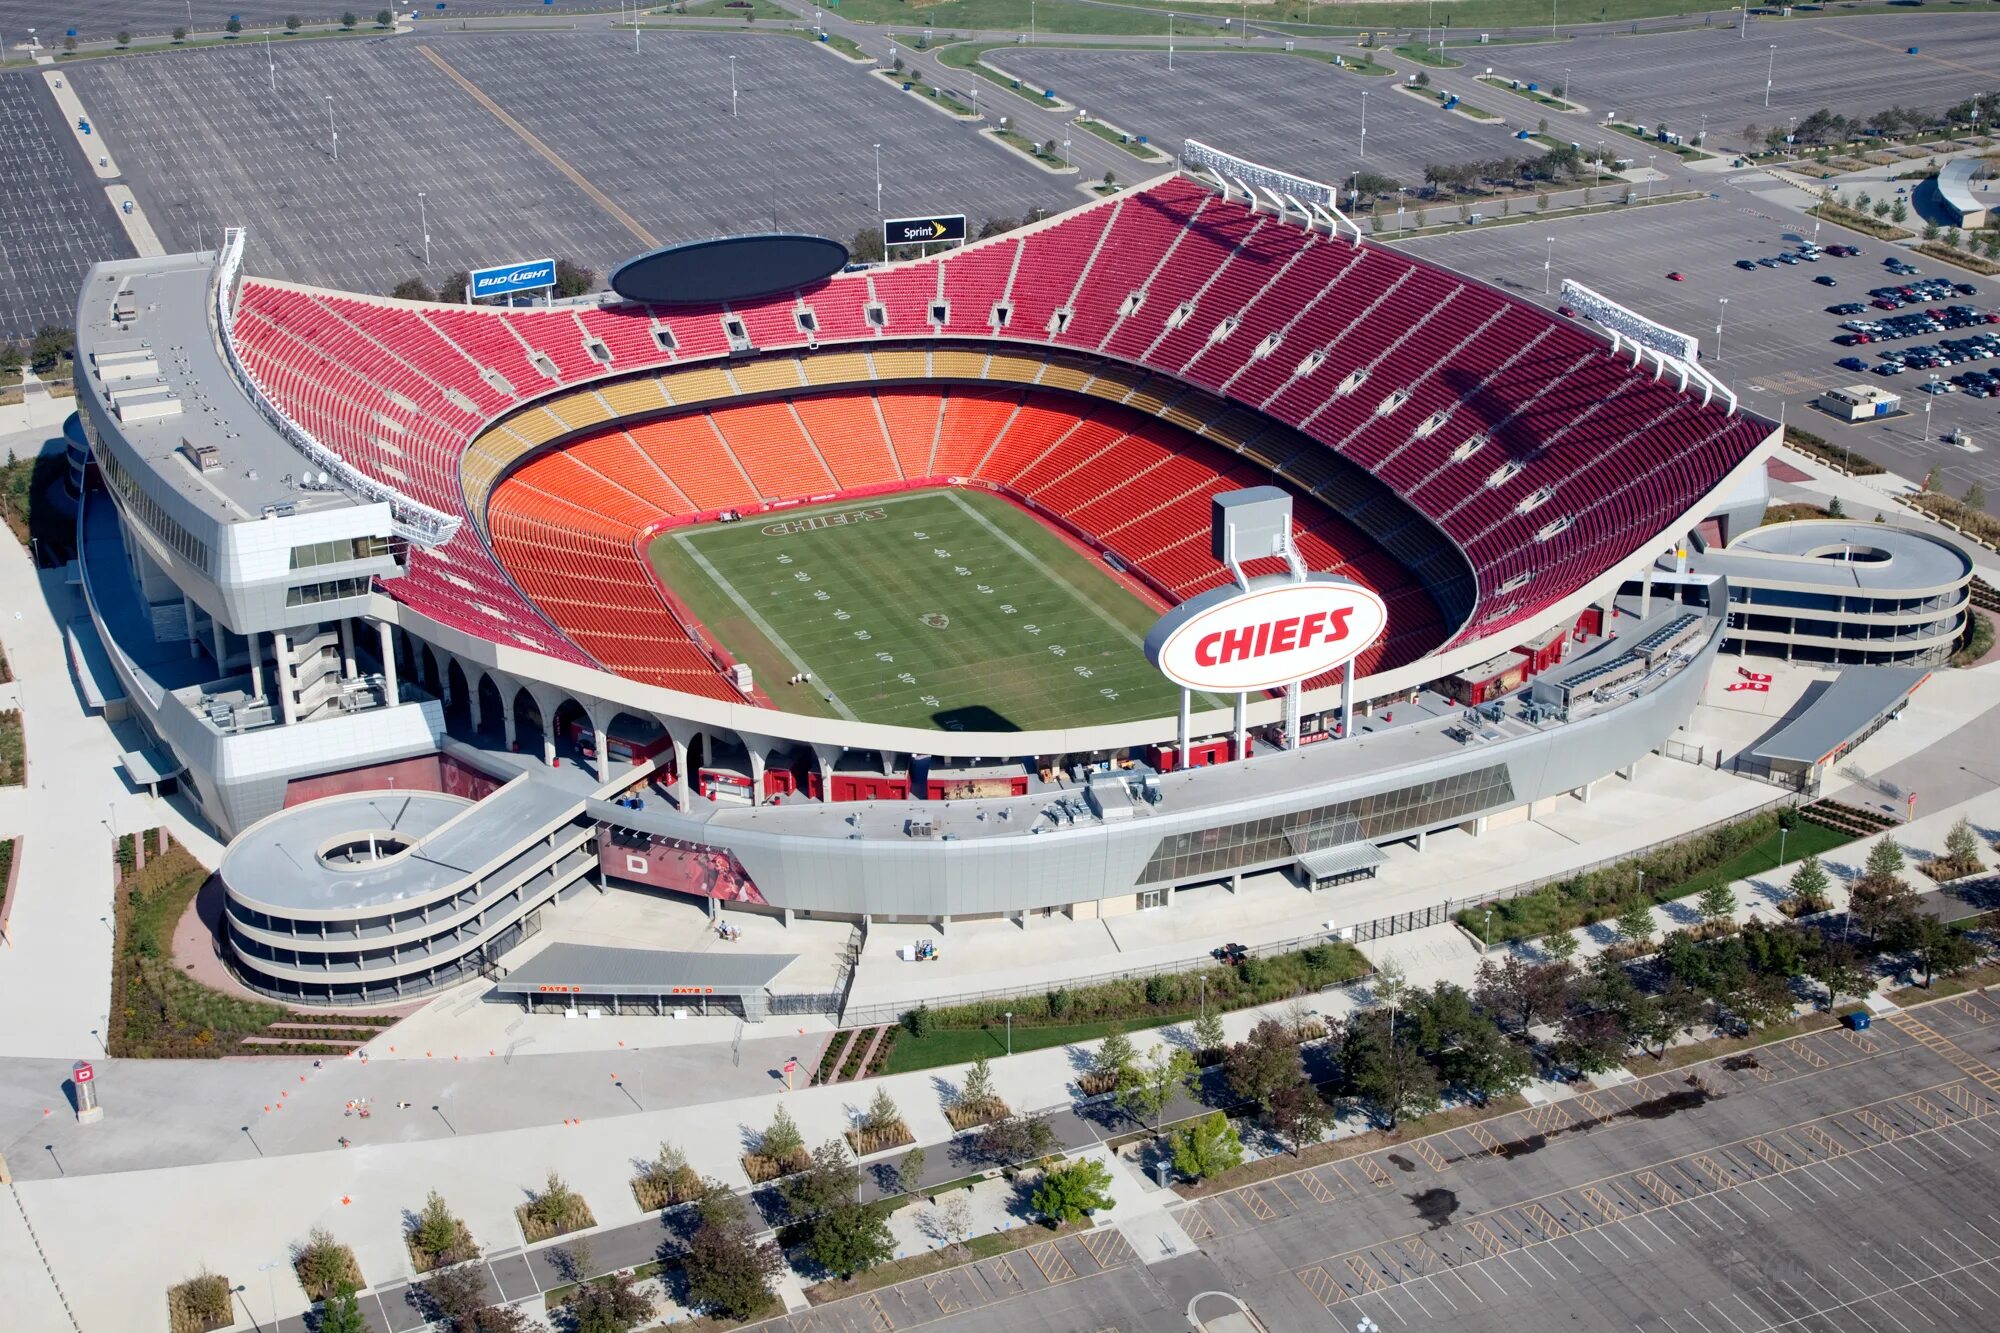 Канзас Сити Чифс стадион. Форма стадиона. Стадионы Канады снаружи. Форма стадиона имеет форму